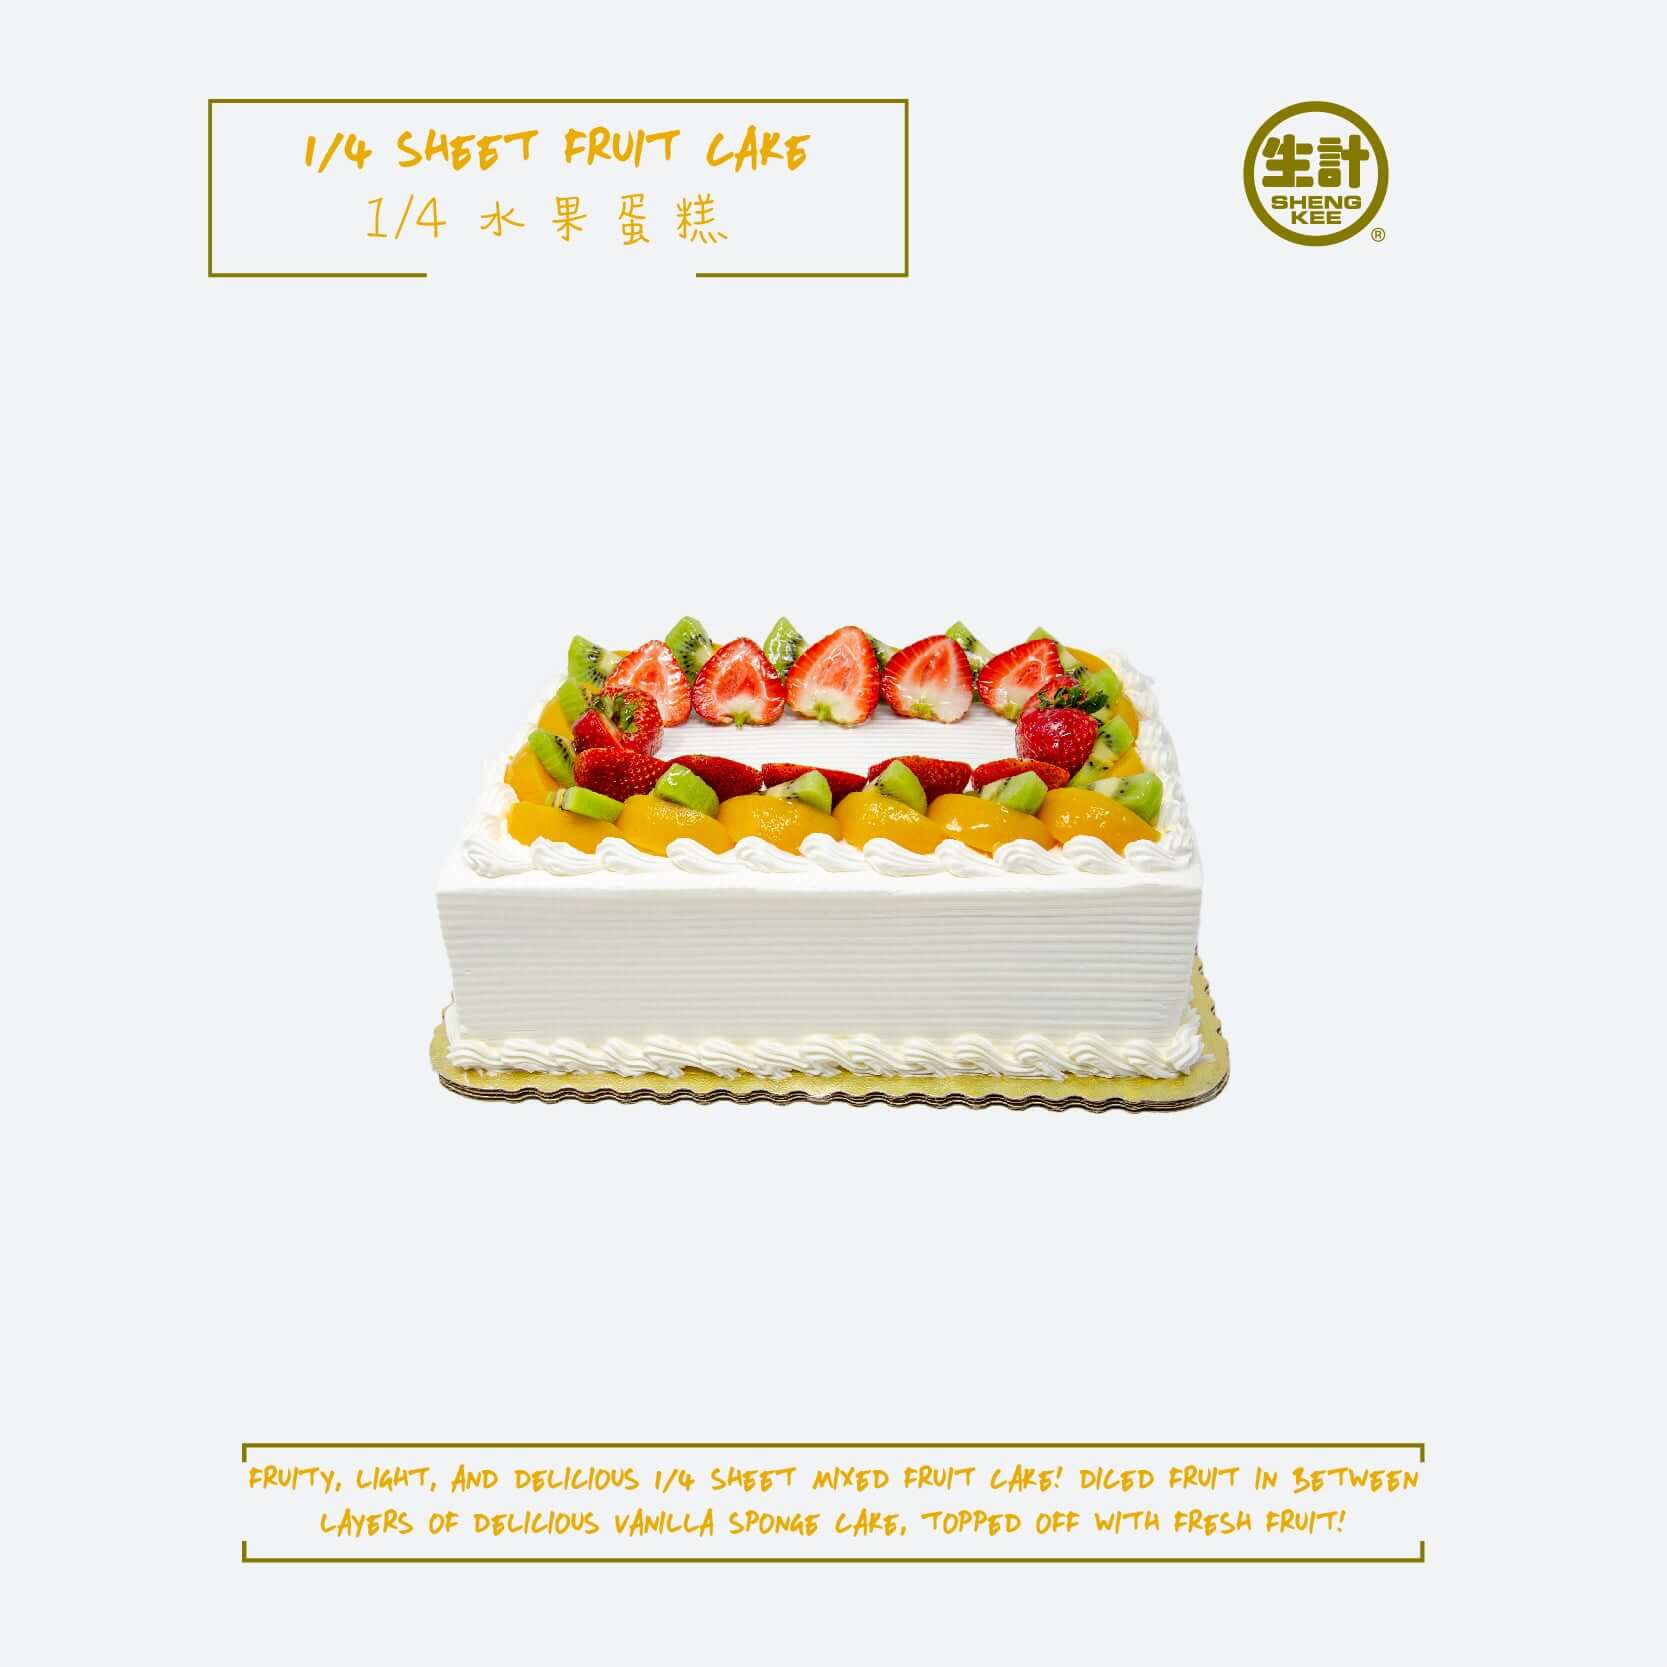 send fruit cream cake to |fruit cream cake delivery |fruit cream cake in - China Flowers Delivery